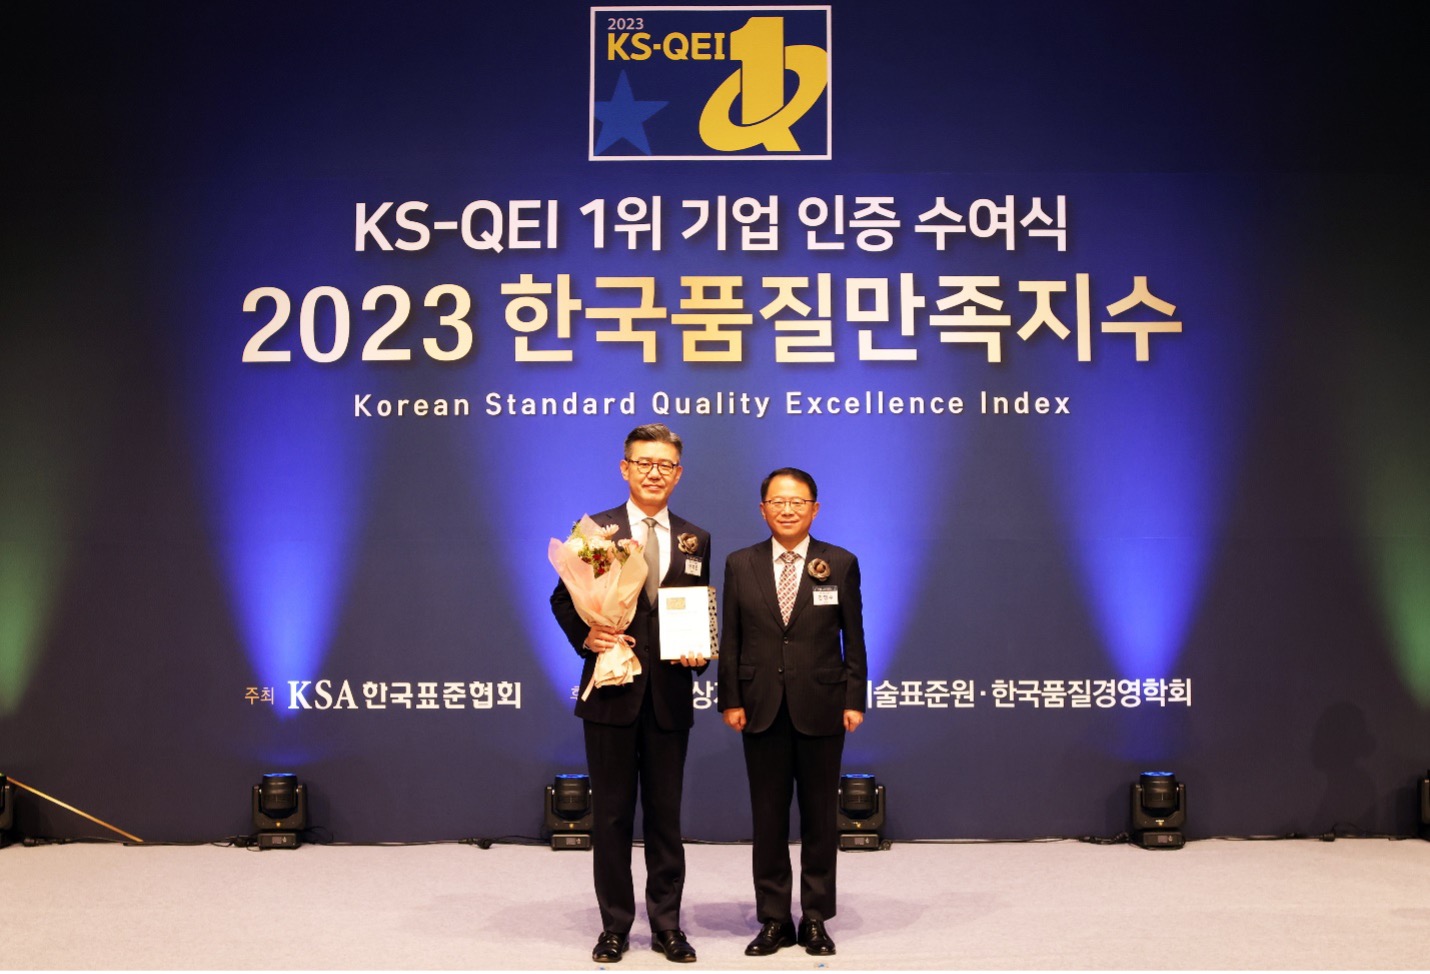 2023 Korean Standard Quality Excellence Index (KS-QEI)